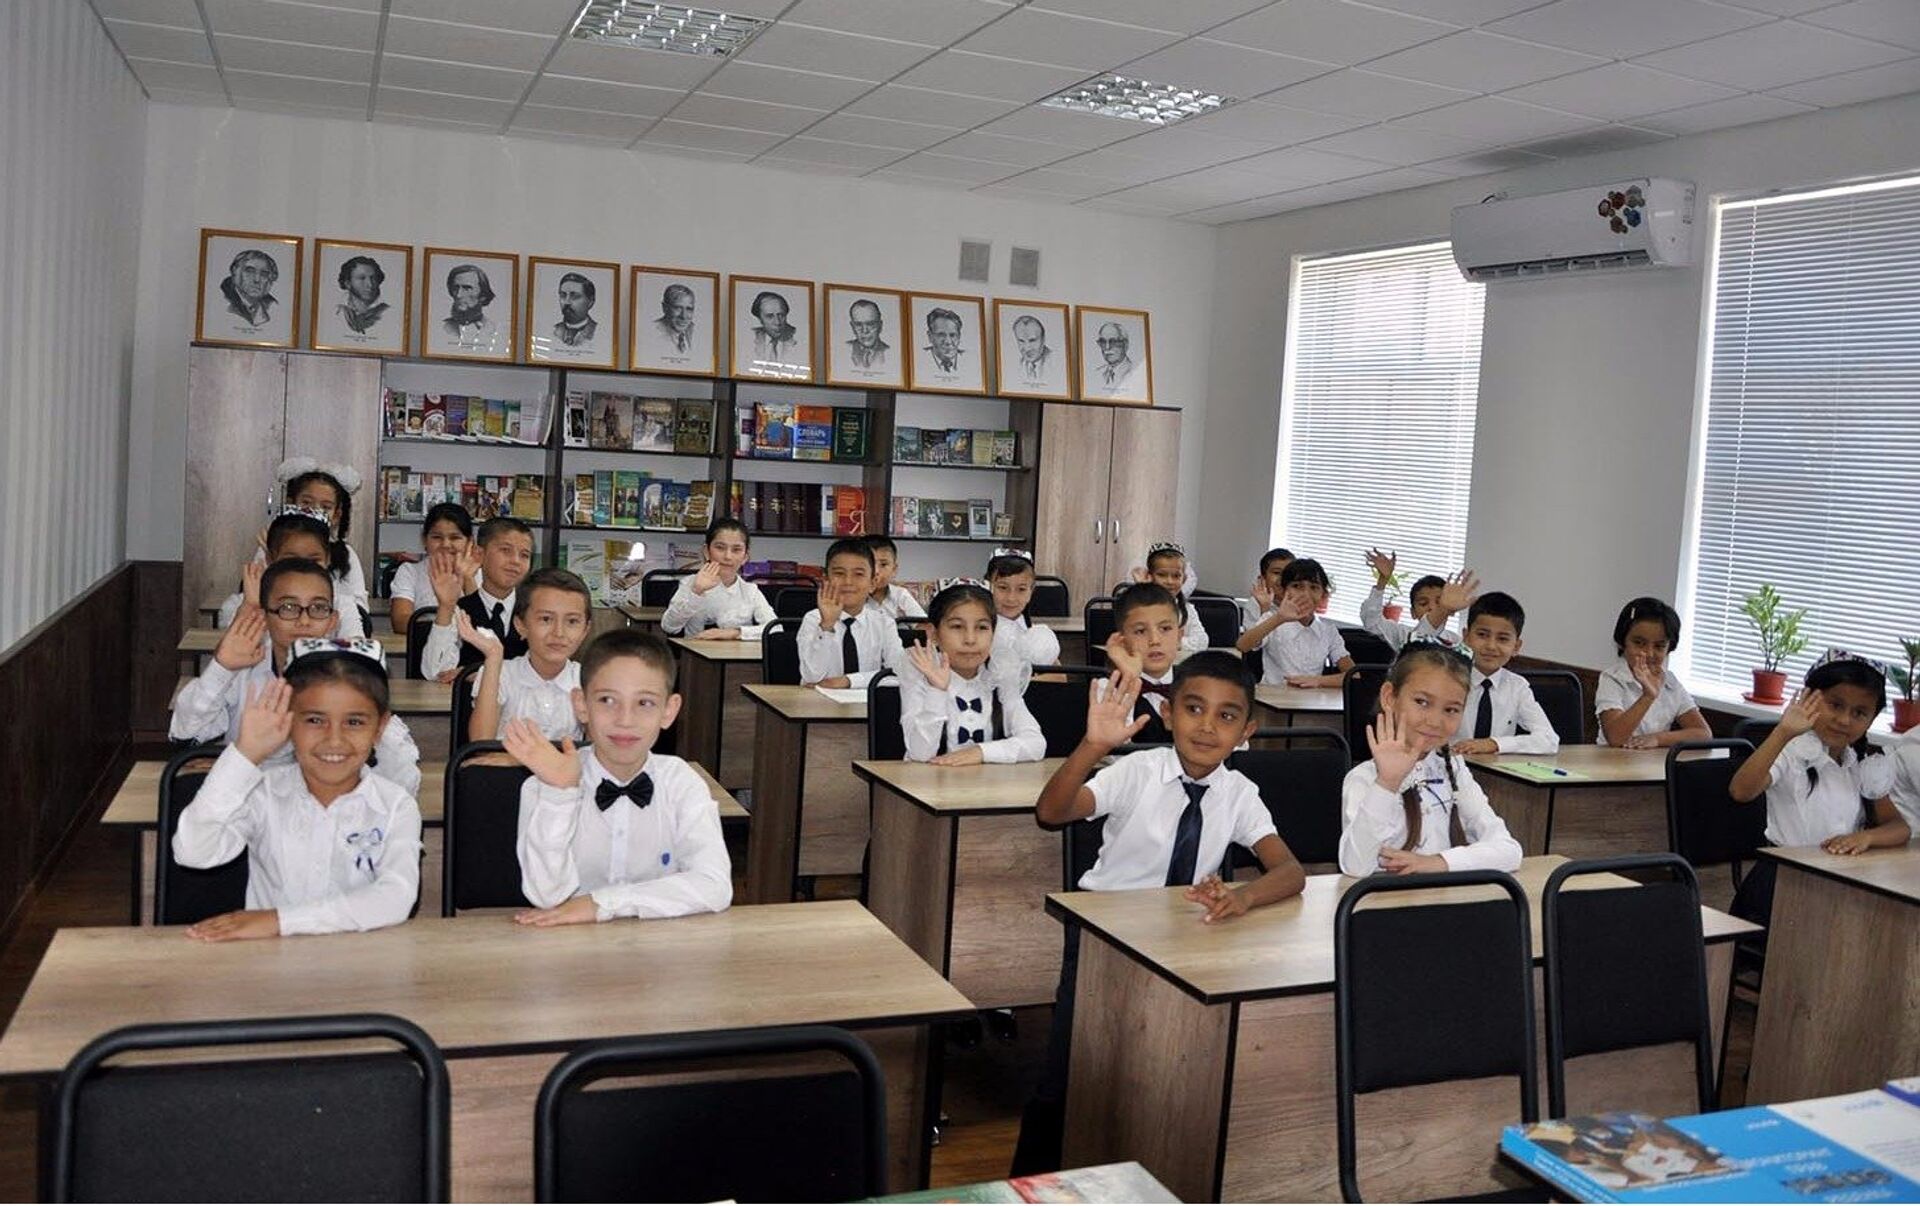 Образование в Узбекистане. Узбекская школа. Школьники Узбекистана. Дети в школе Узбекистан.